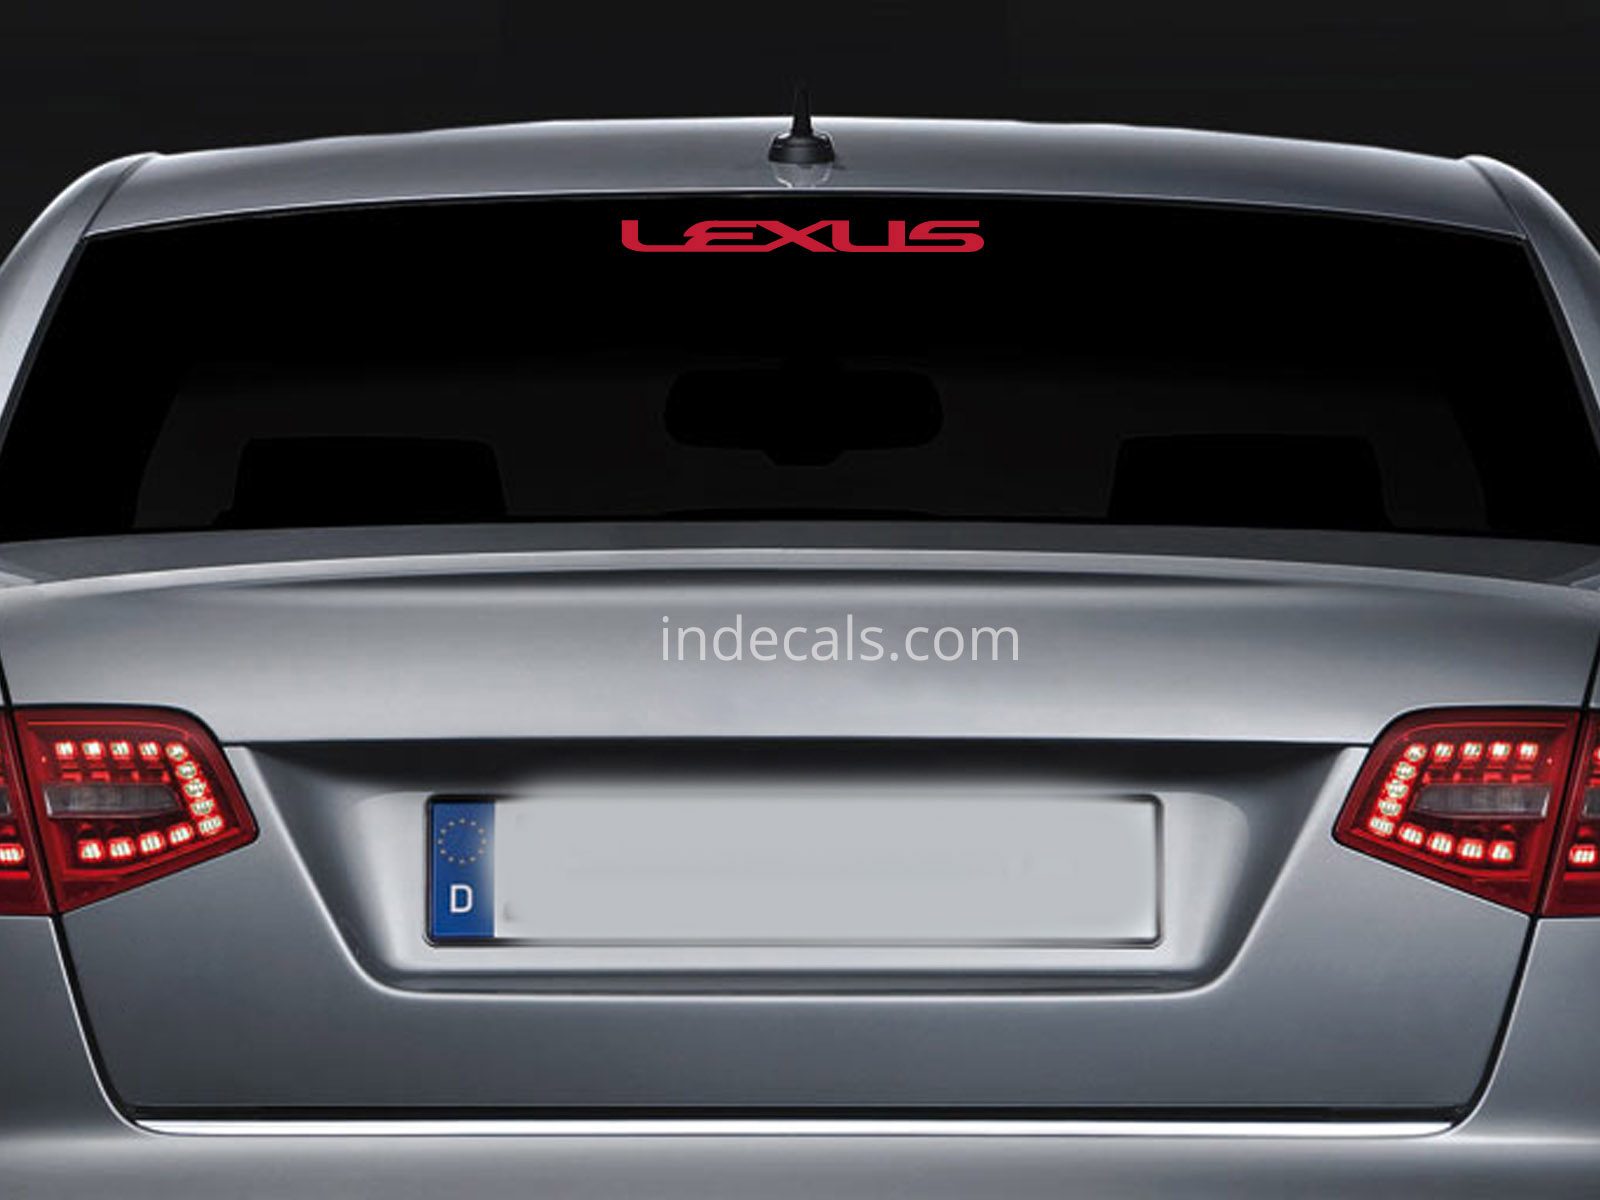 1 x Lexus Sticker for Windshield or Back Window - Red